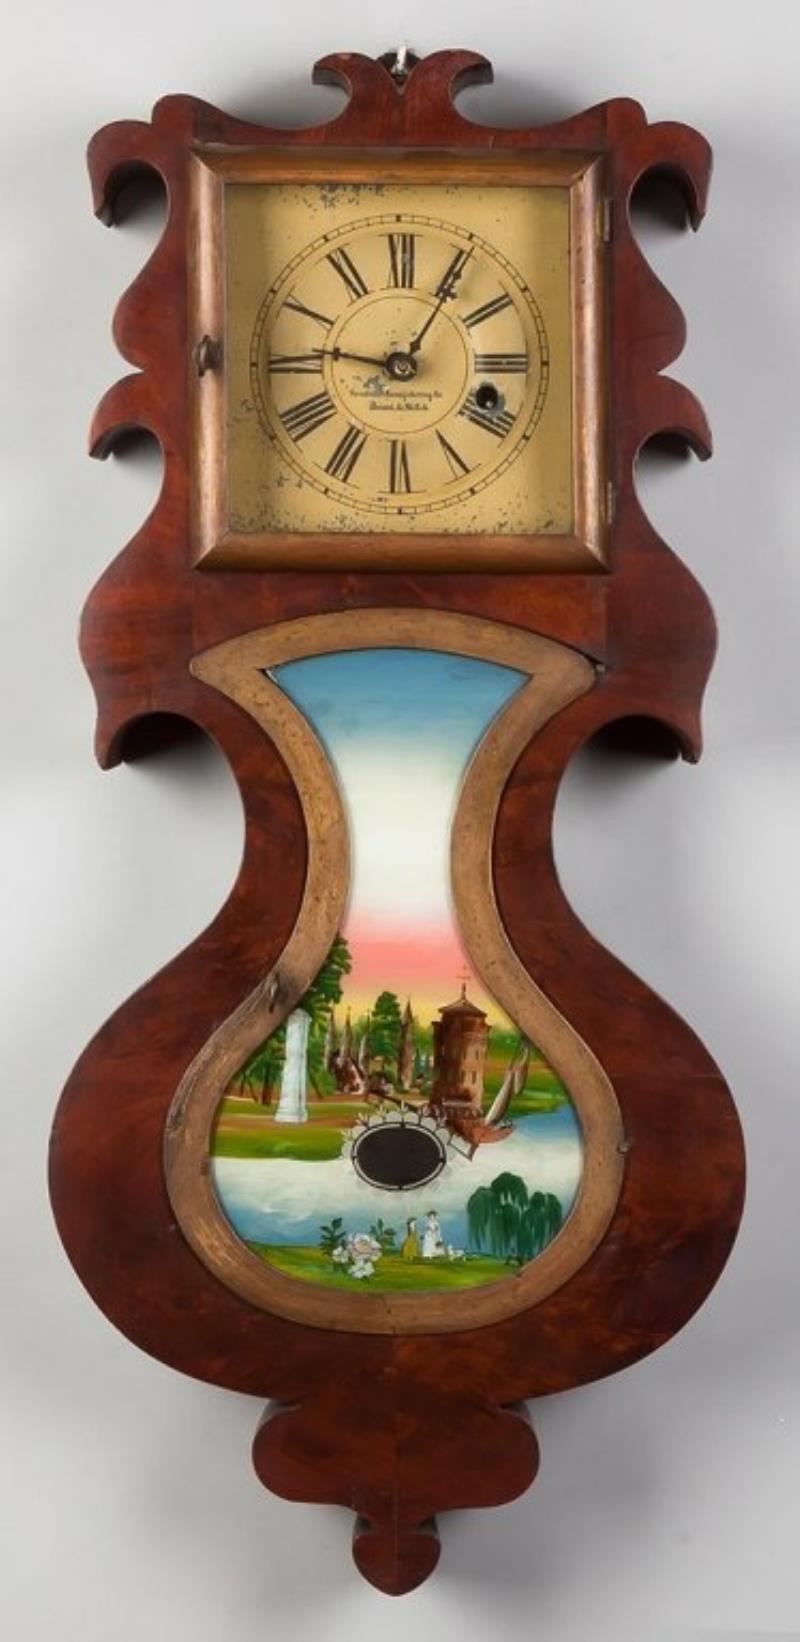 J.C. Brown & Co. Acorn Wall Clock, Bristol, CT